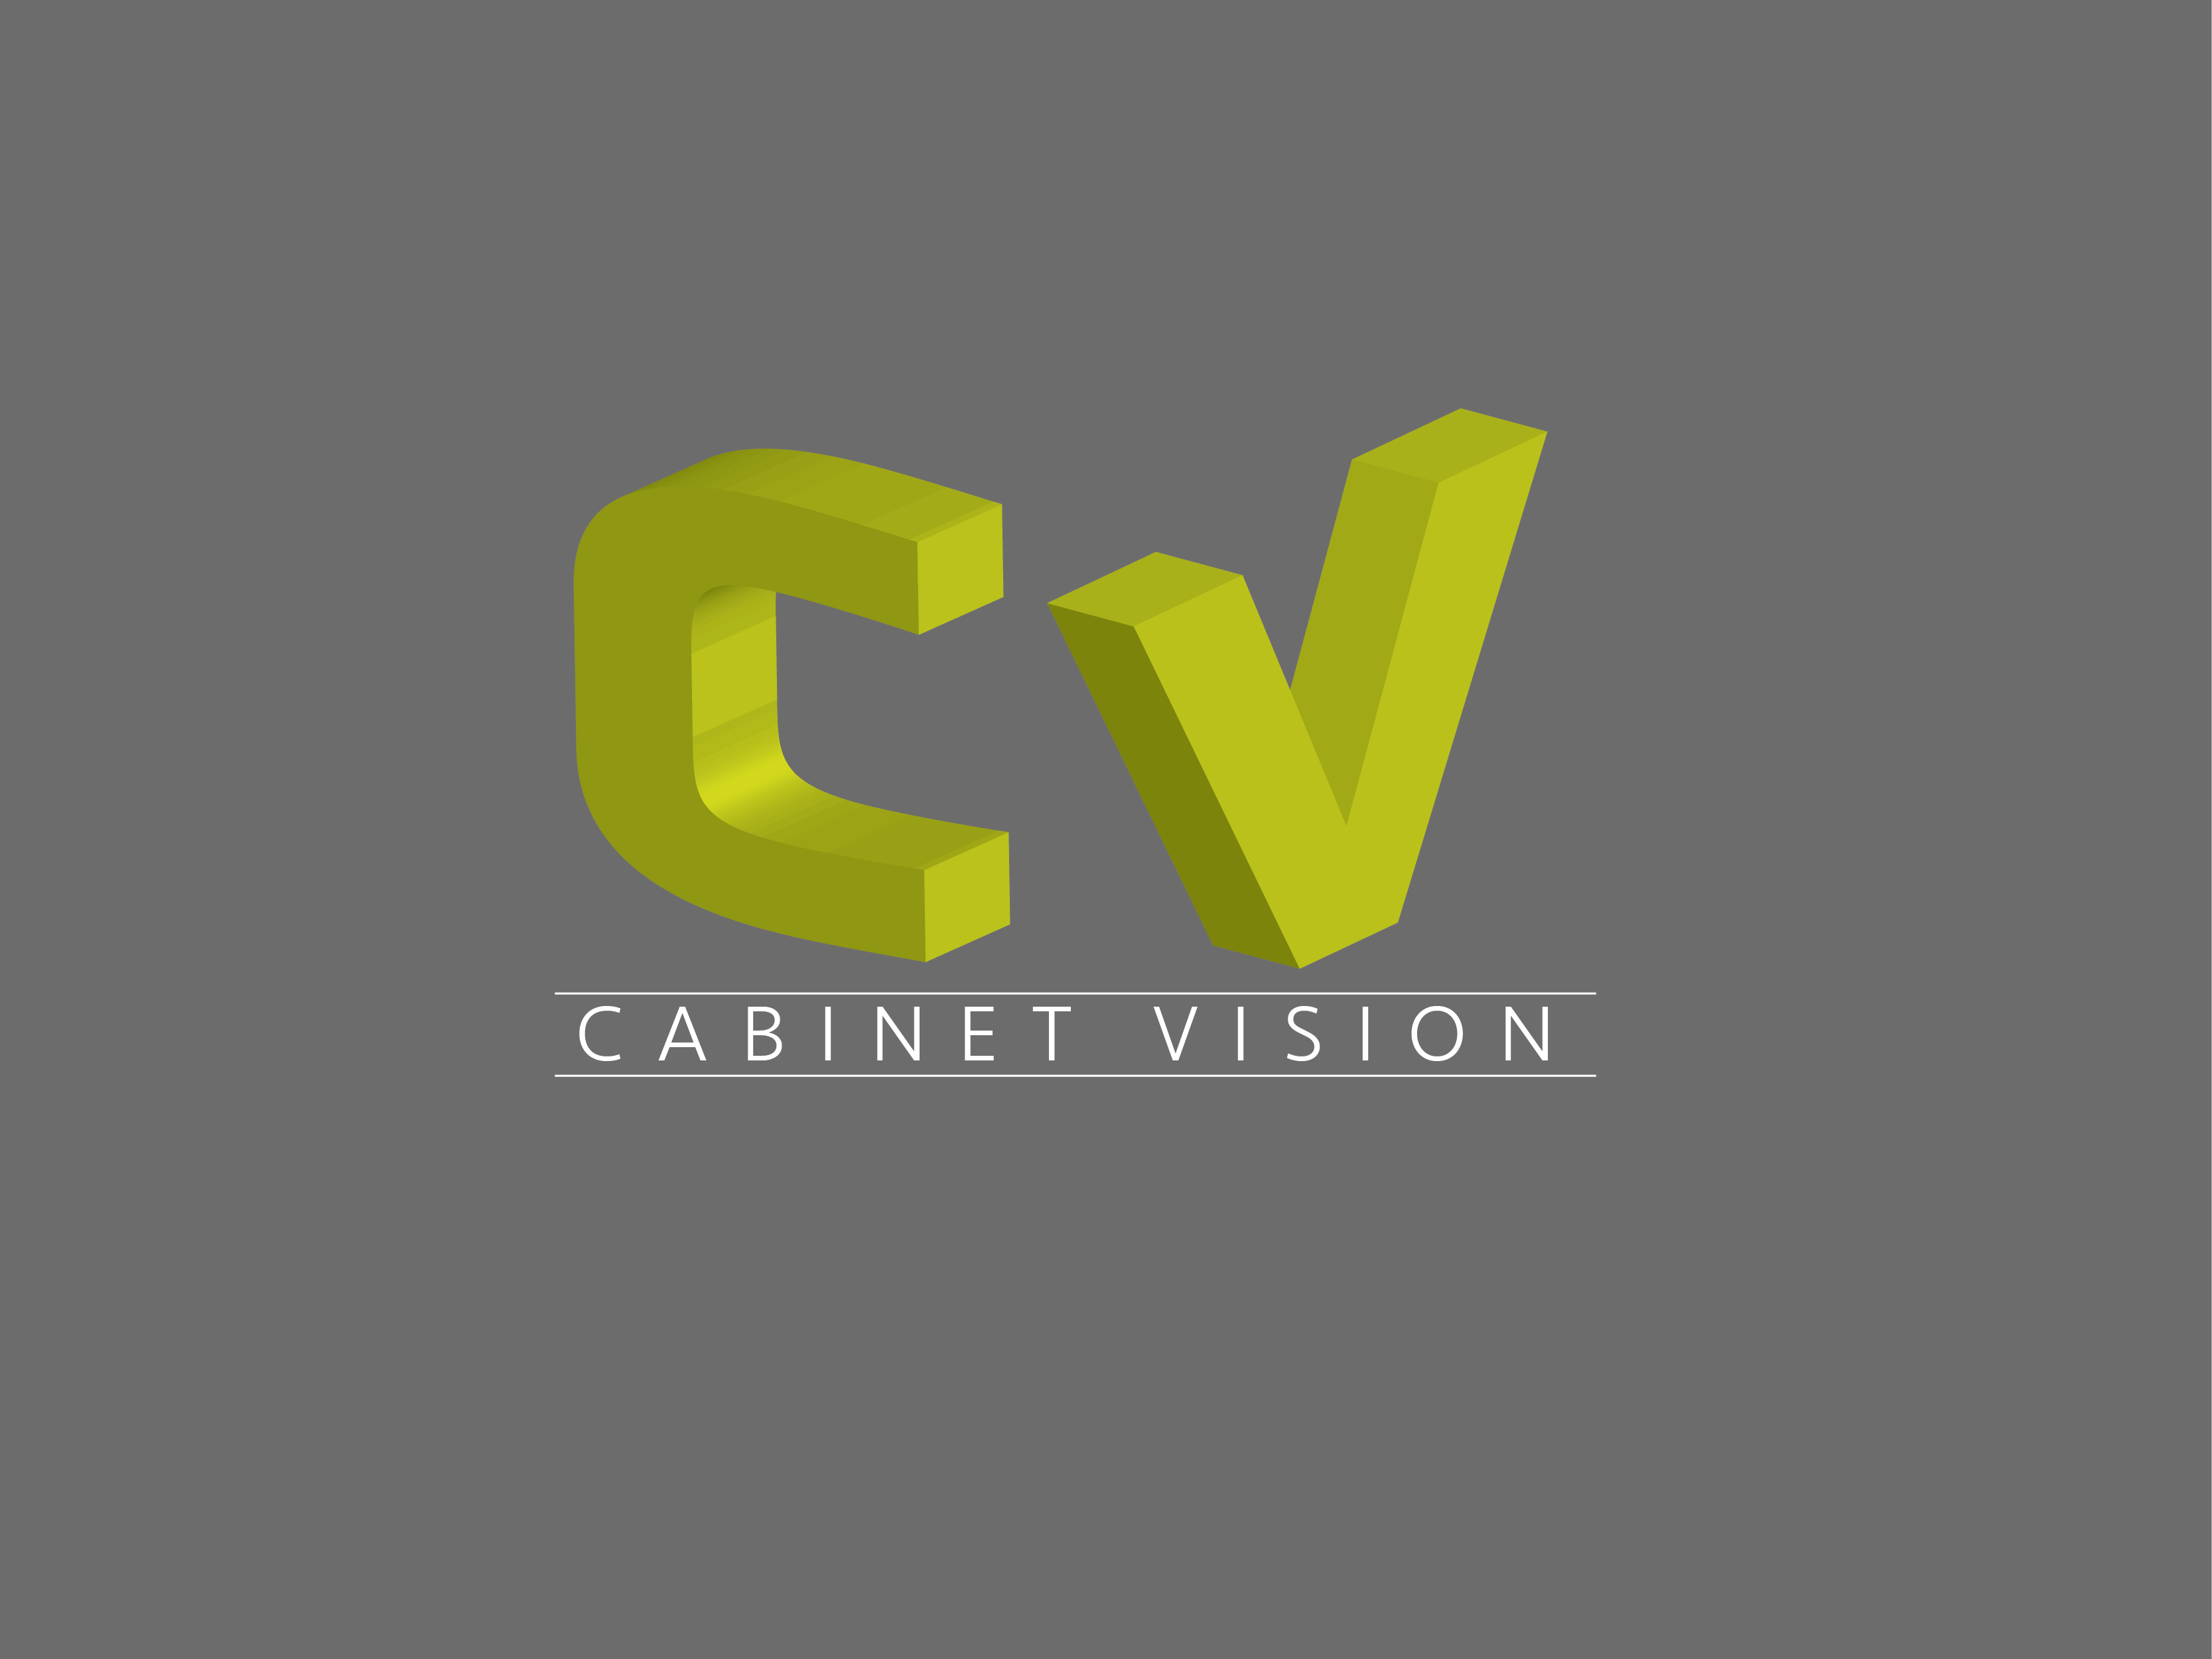 CabinetVision